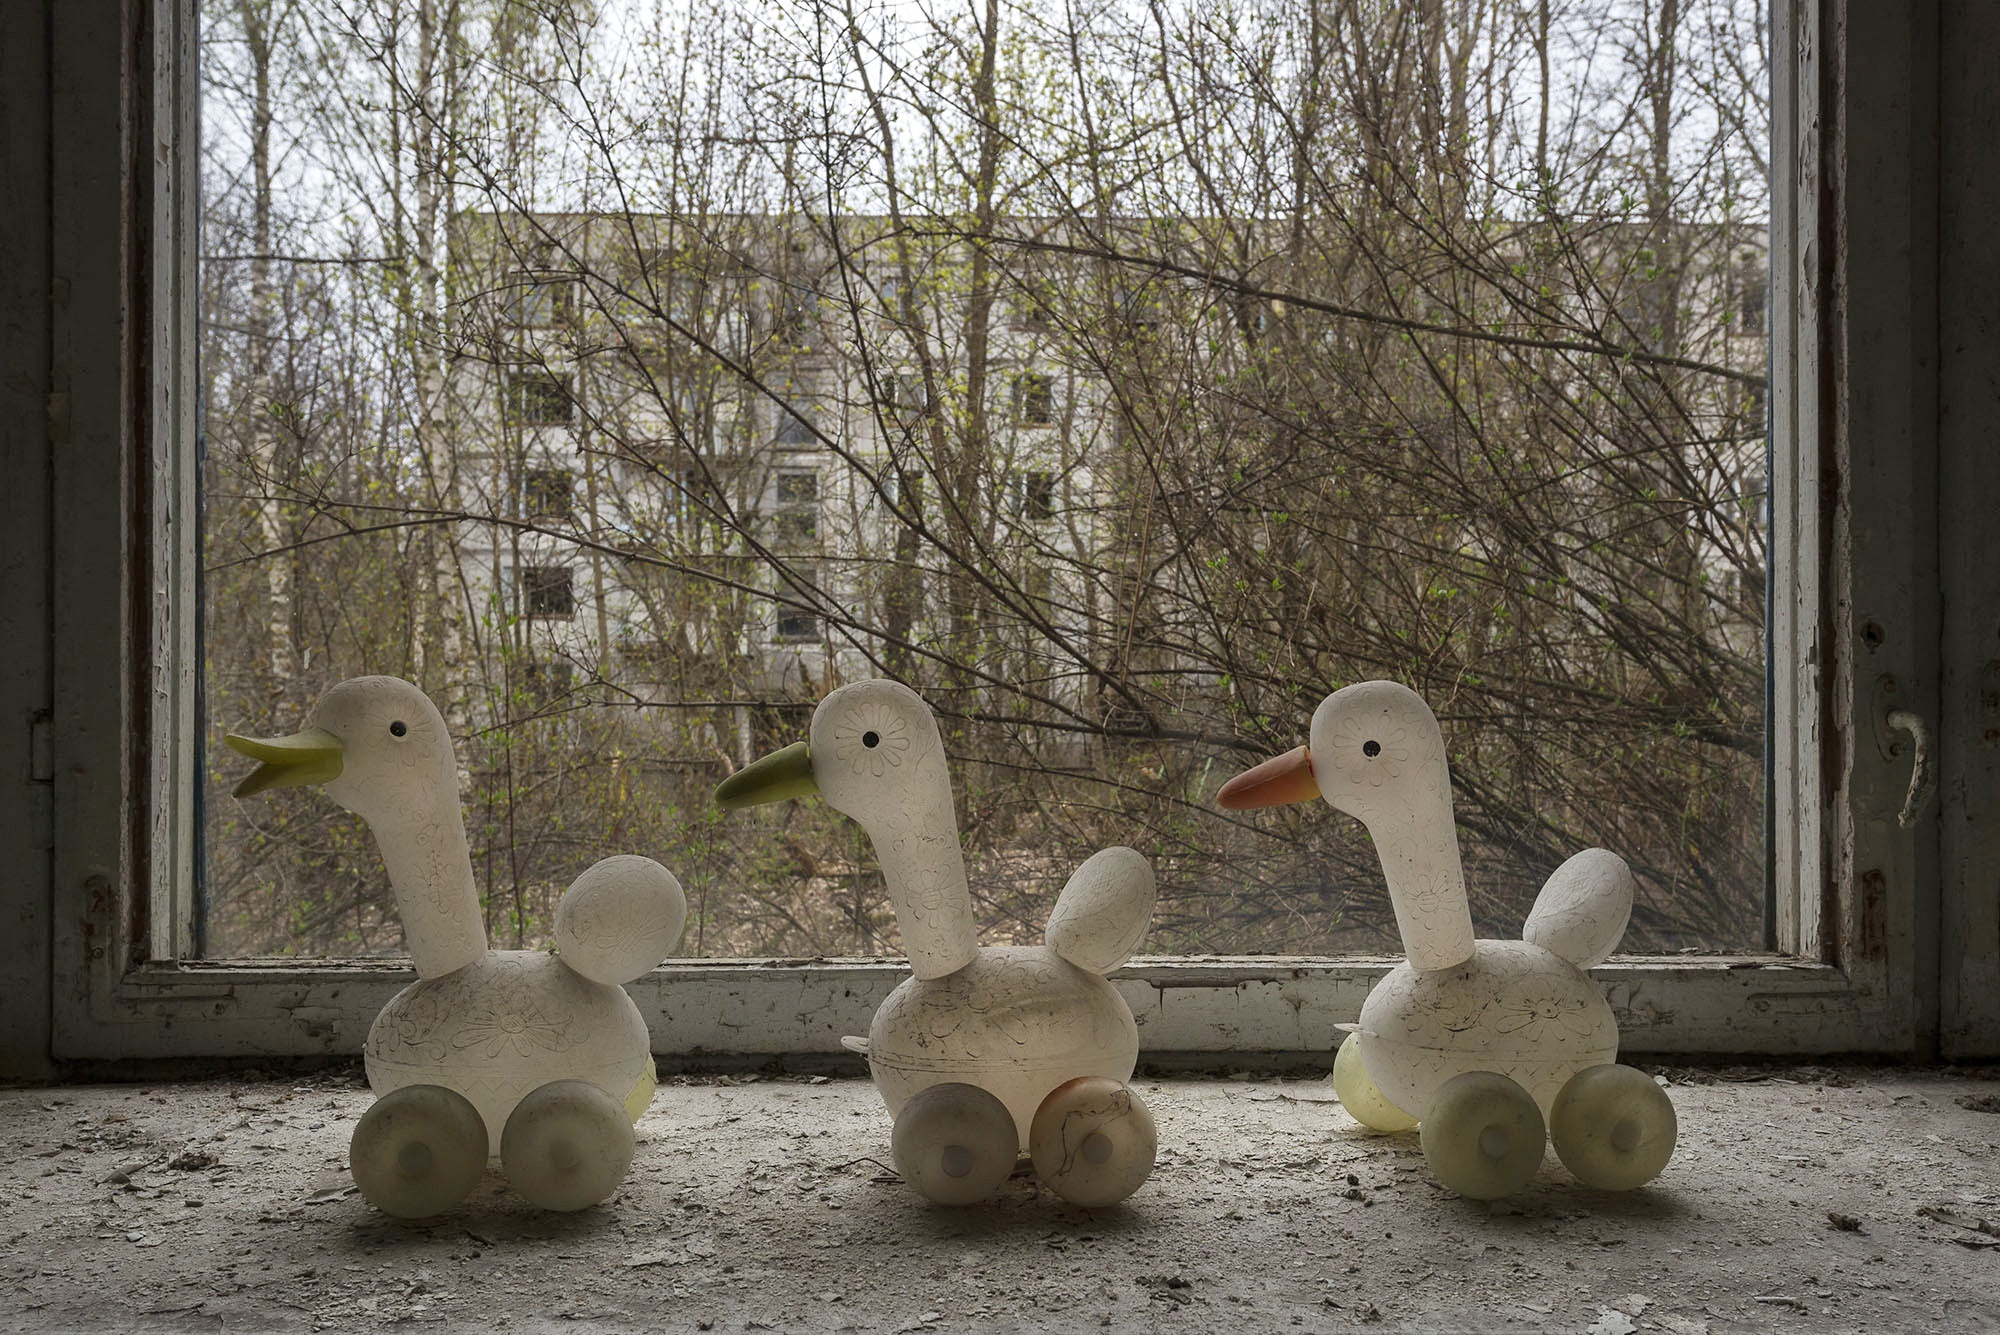 General 2000x1335 old window toys rubber ducks Chernobyl Ukraine building